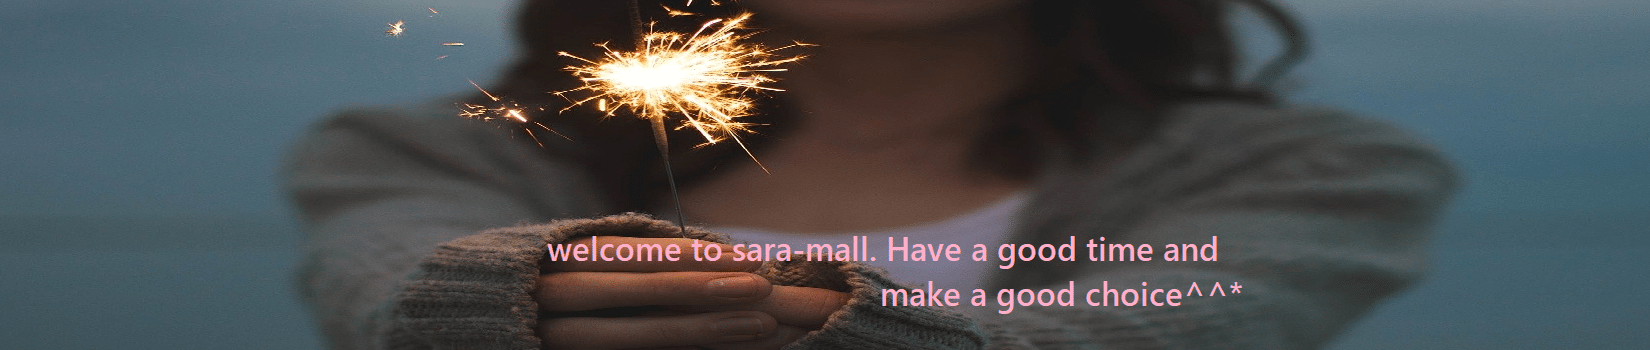 sara-mall